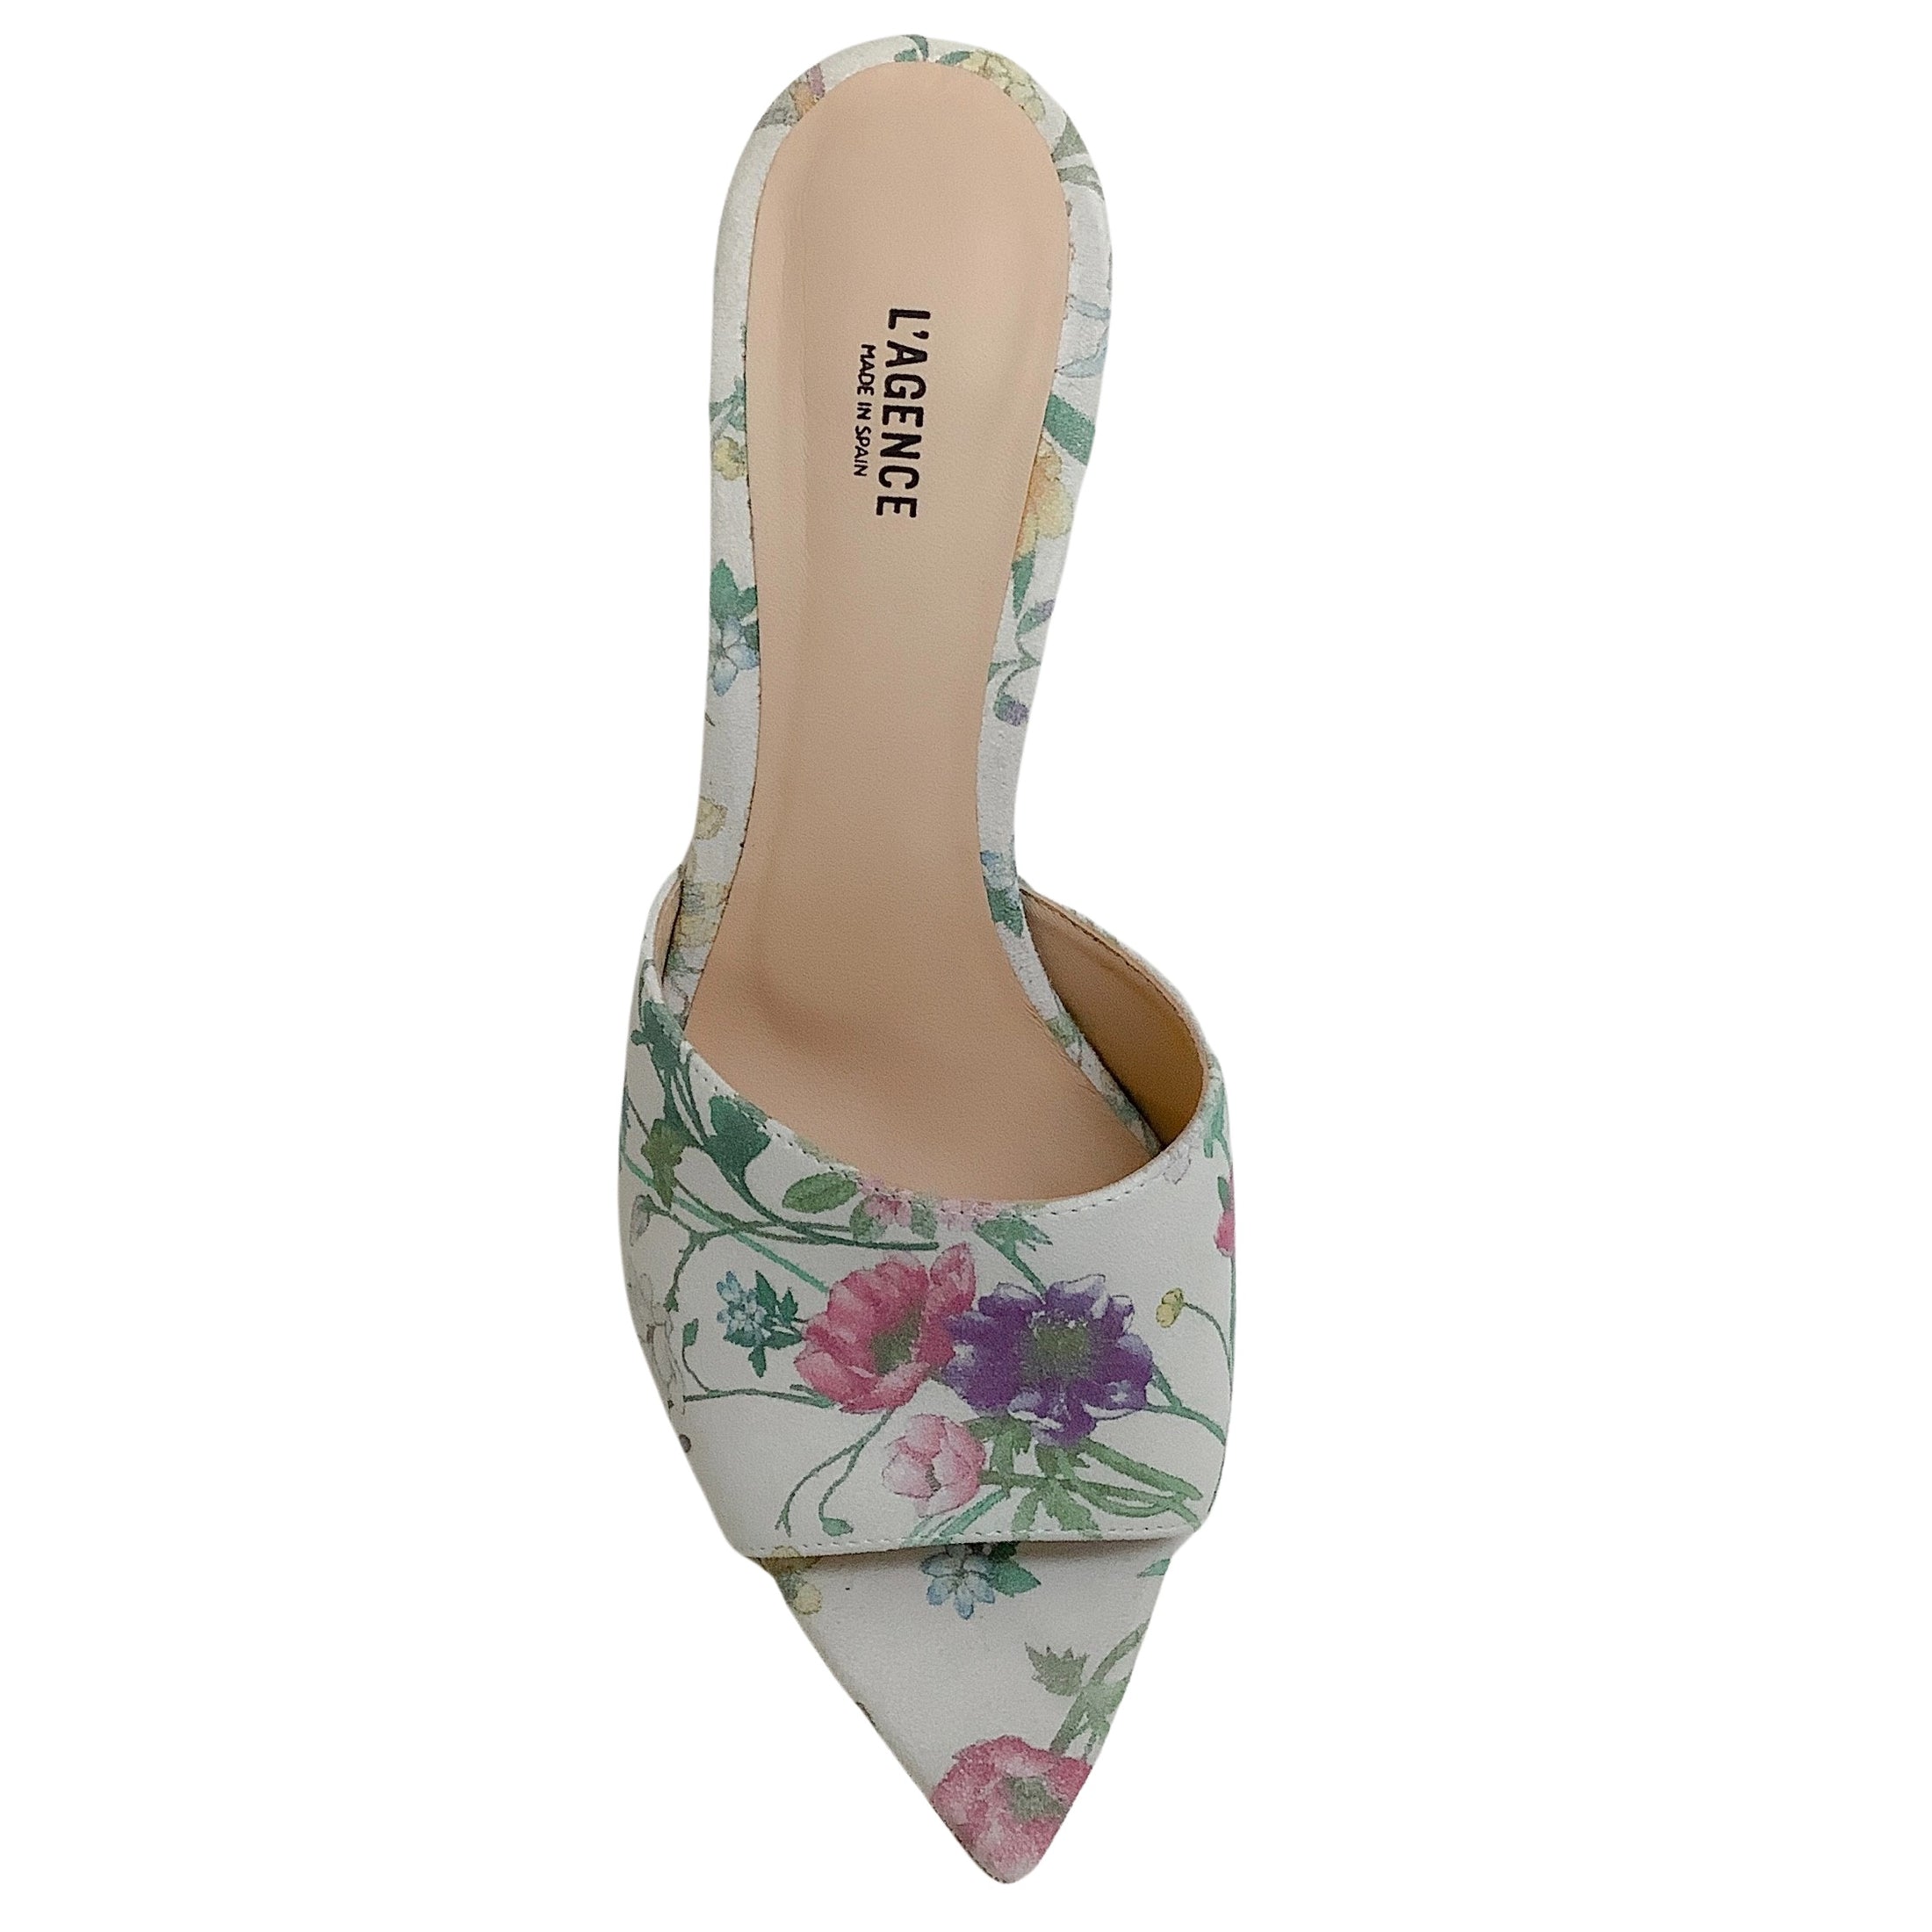 L'Agence Multi Floral Lolita Pointed Toe Slide Sandals